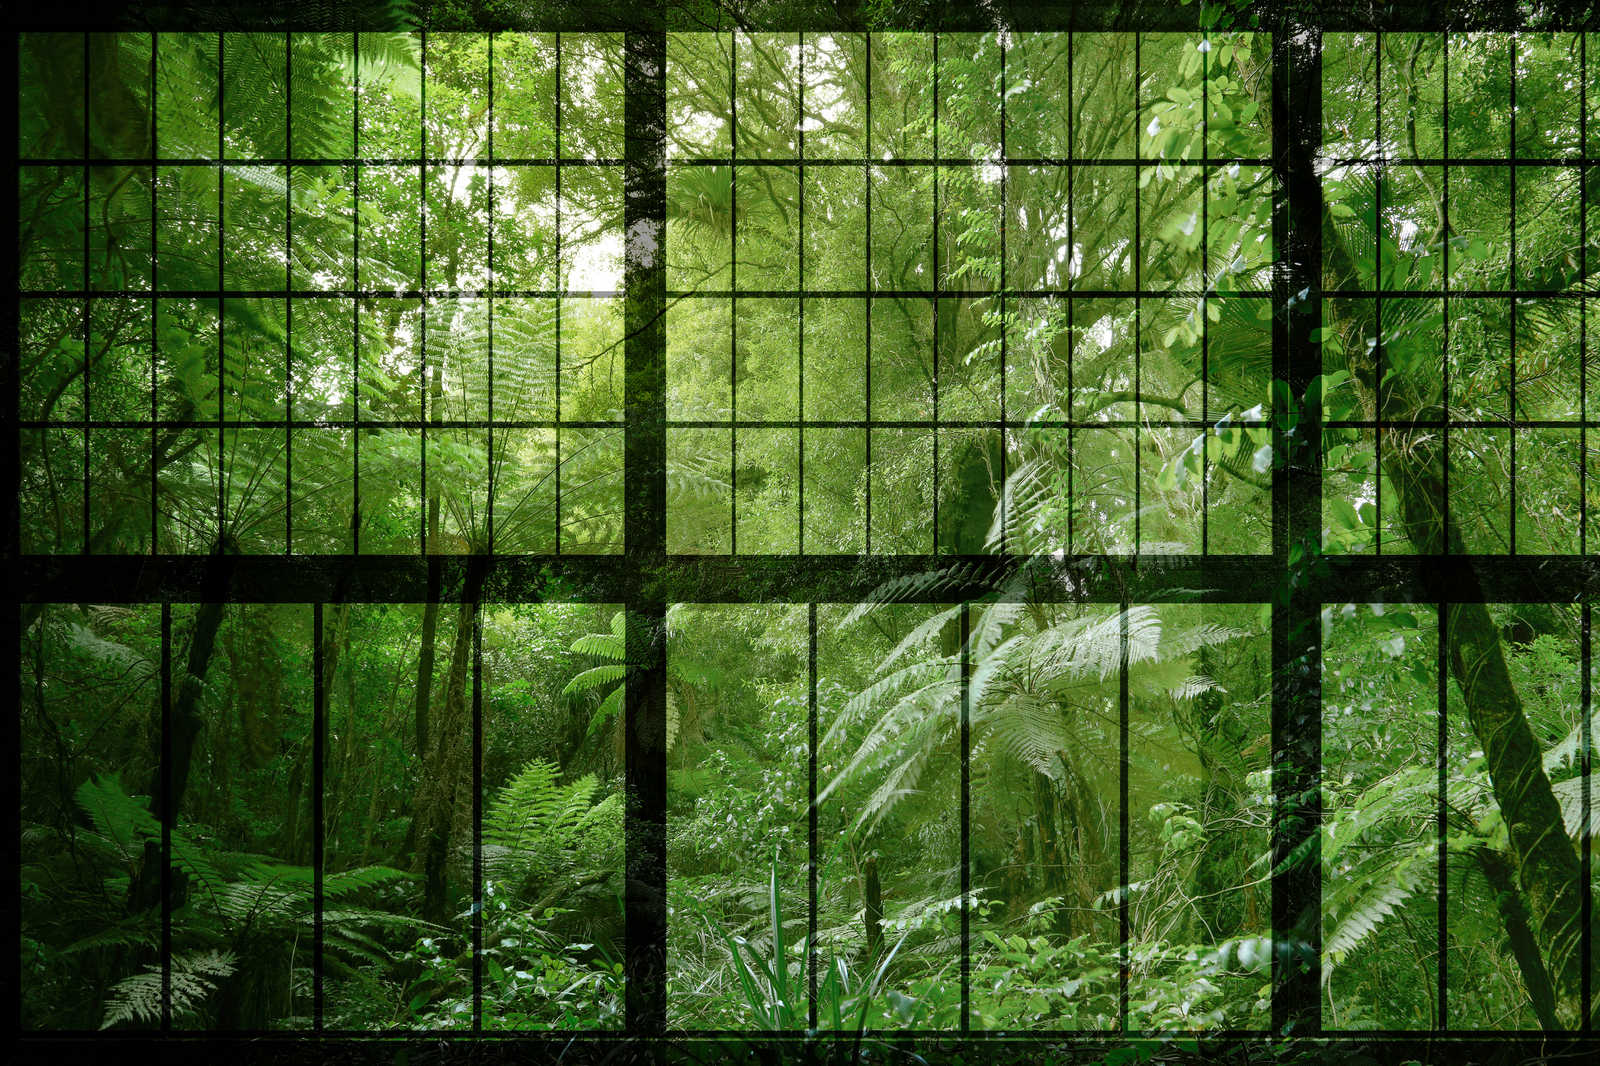             Rainforest 2 - Loftfenster Leinwandbild mit Dschungel Aussicht – 1,20 m x 0,80 m
        